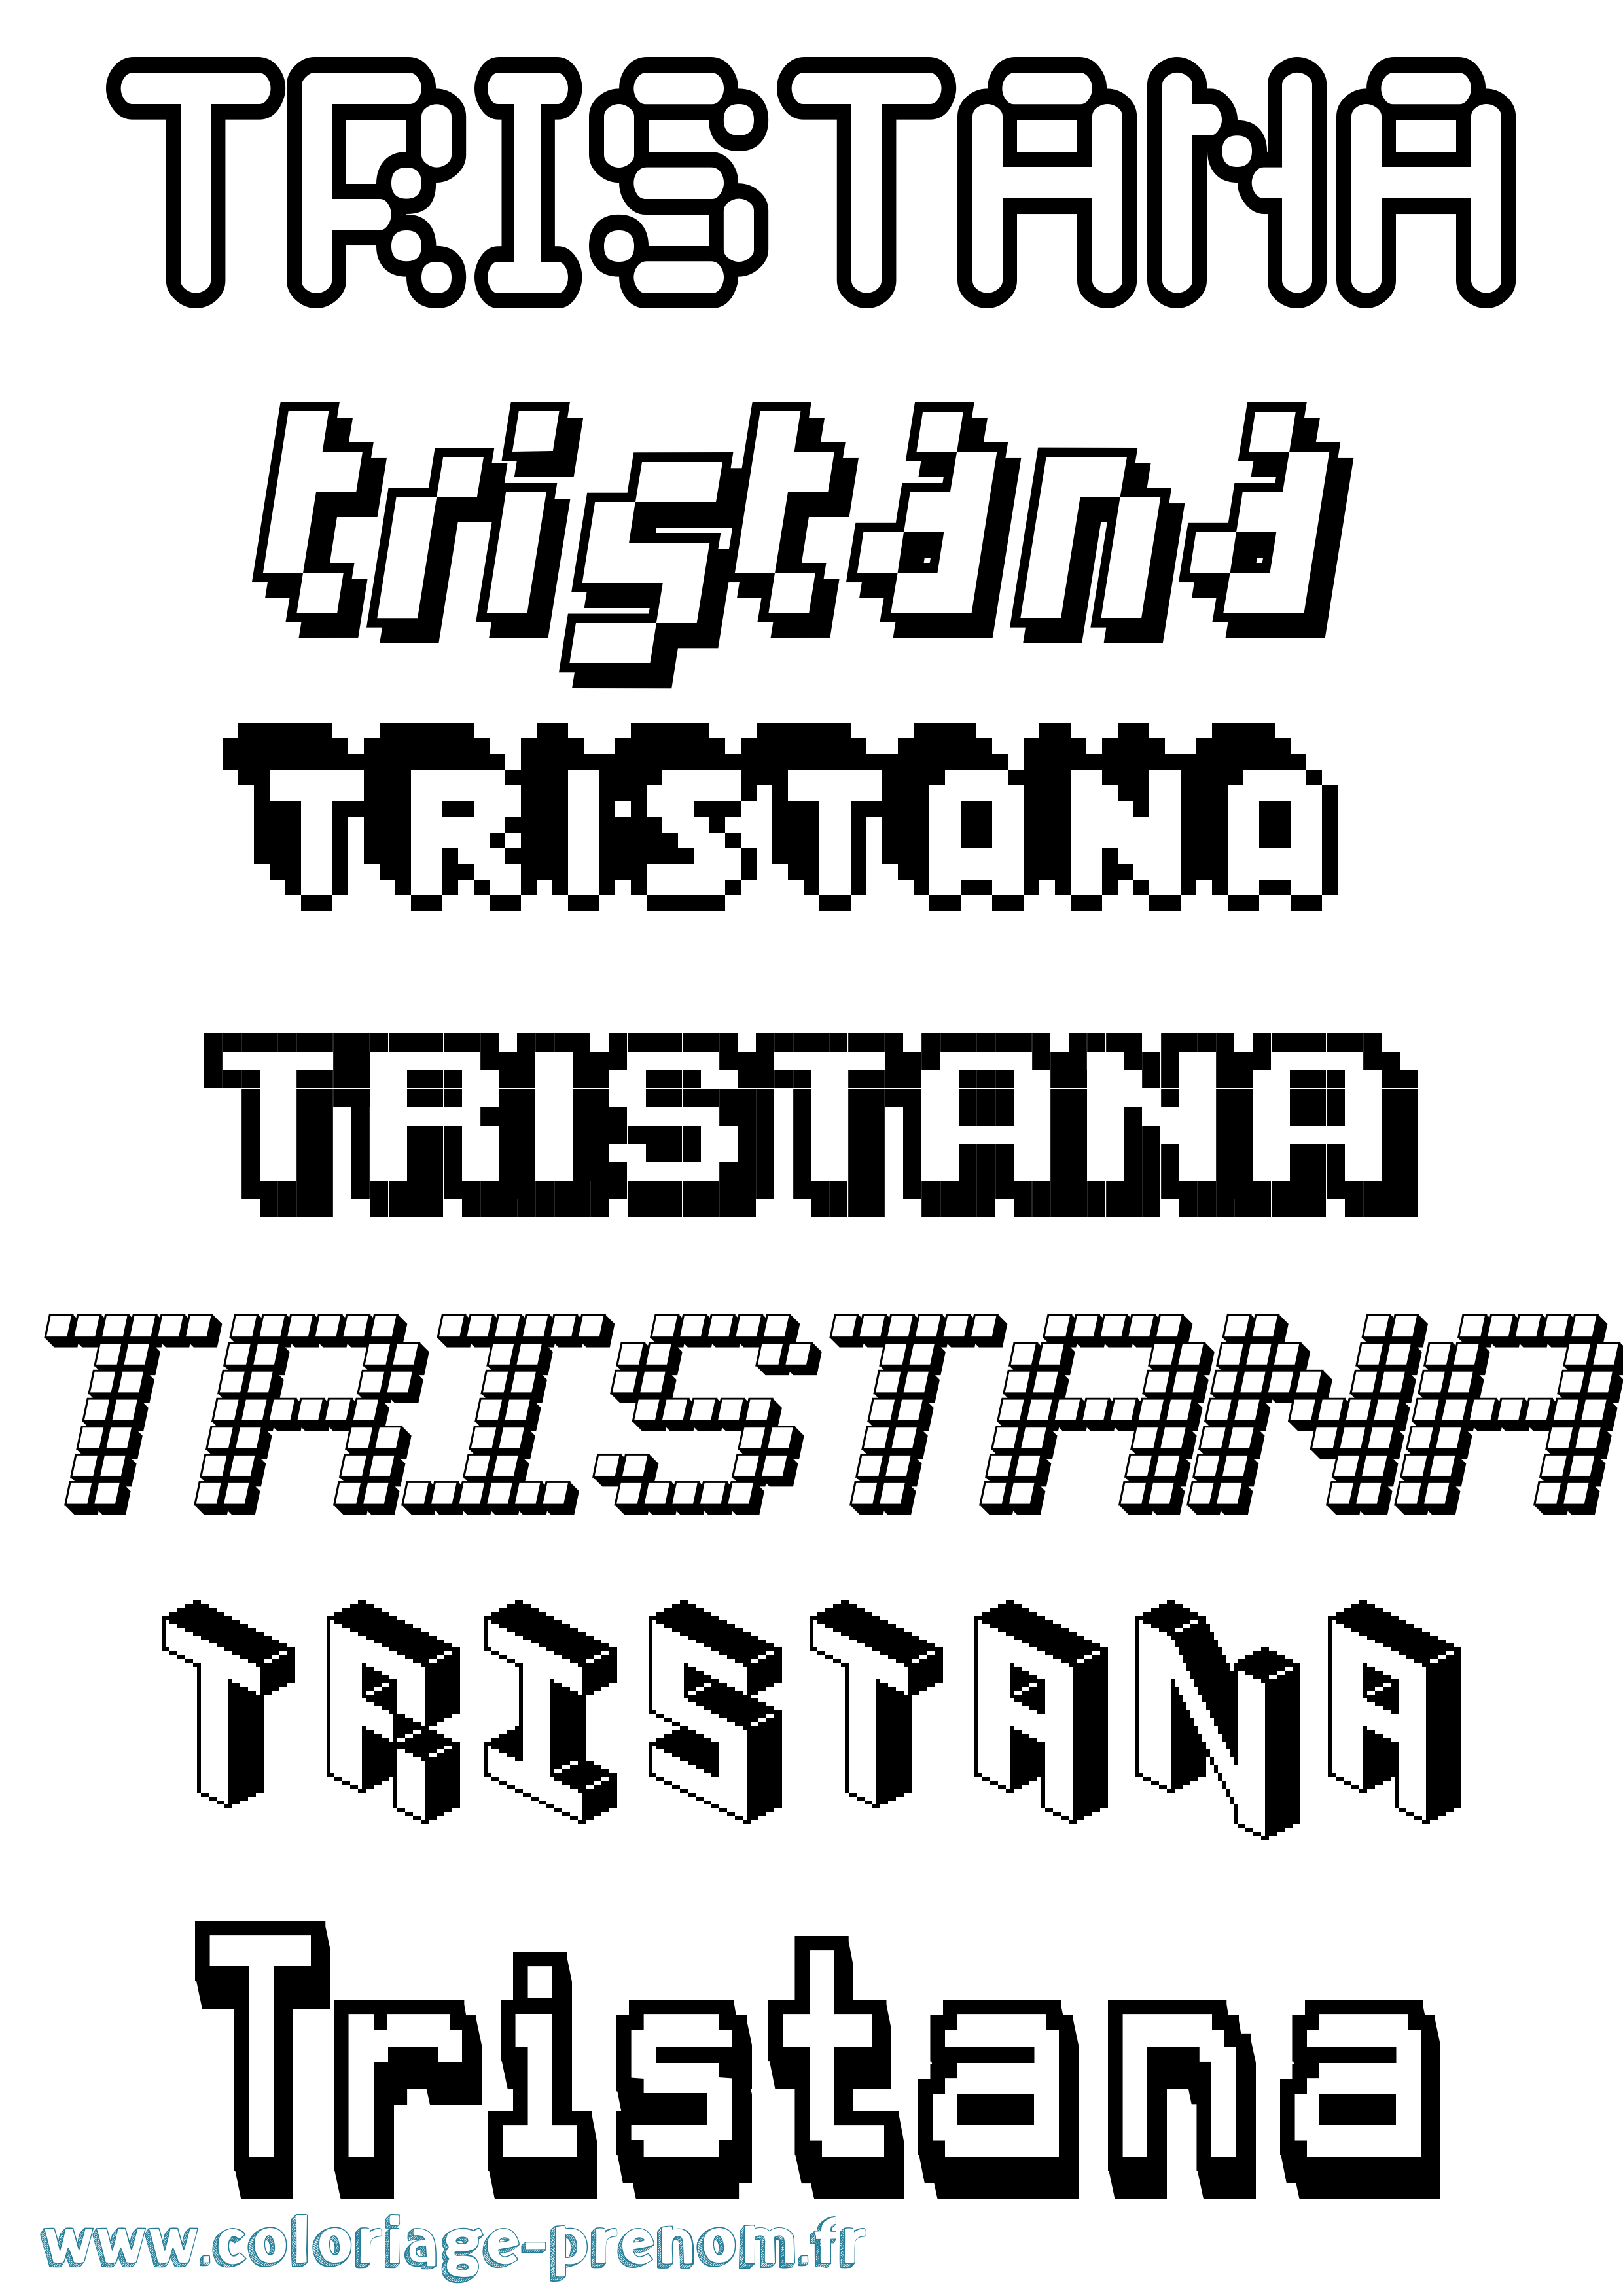 Coloriage prénom Tristana Pixel